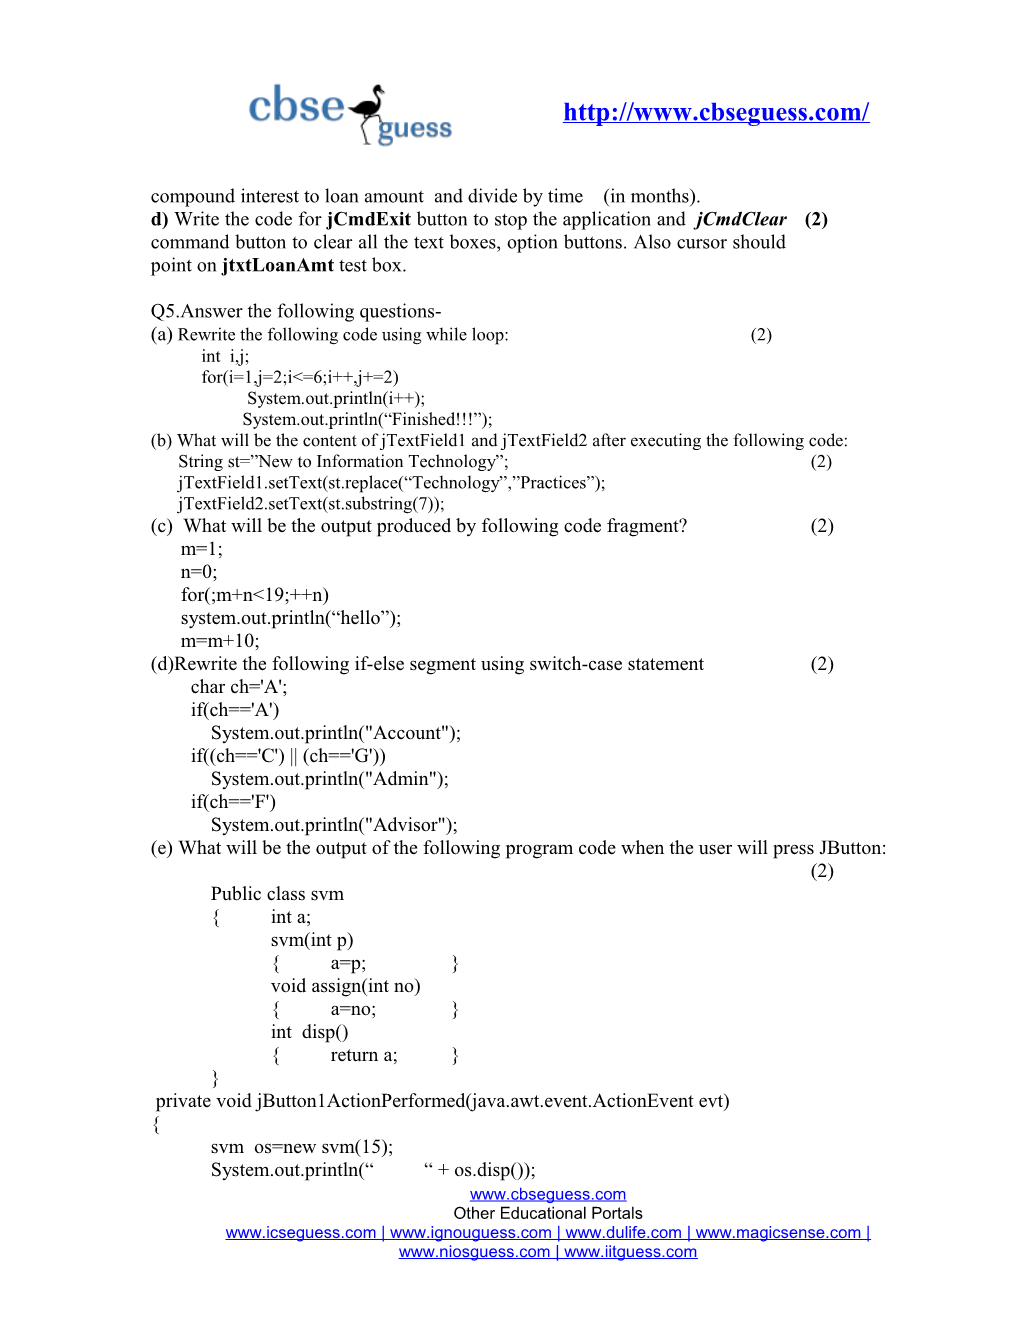 Sample Paper 2012 Class XII Subject Informatics Practices